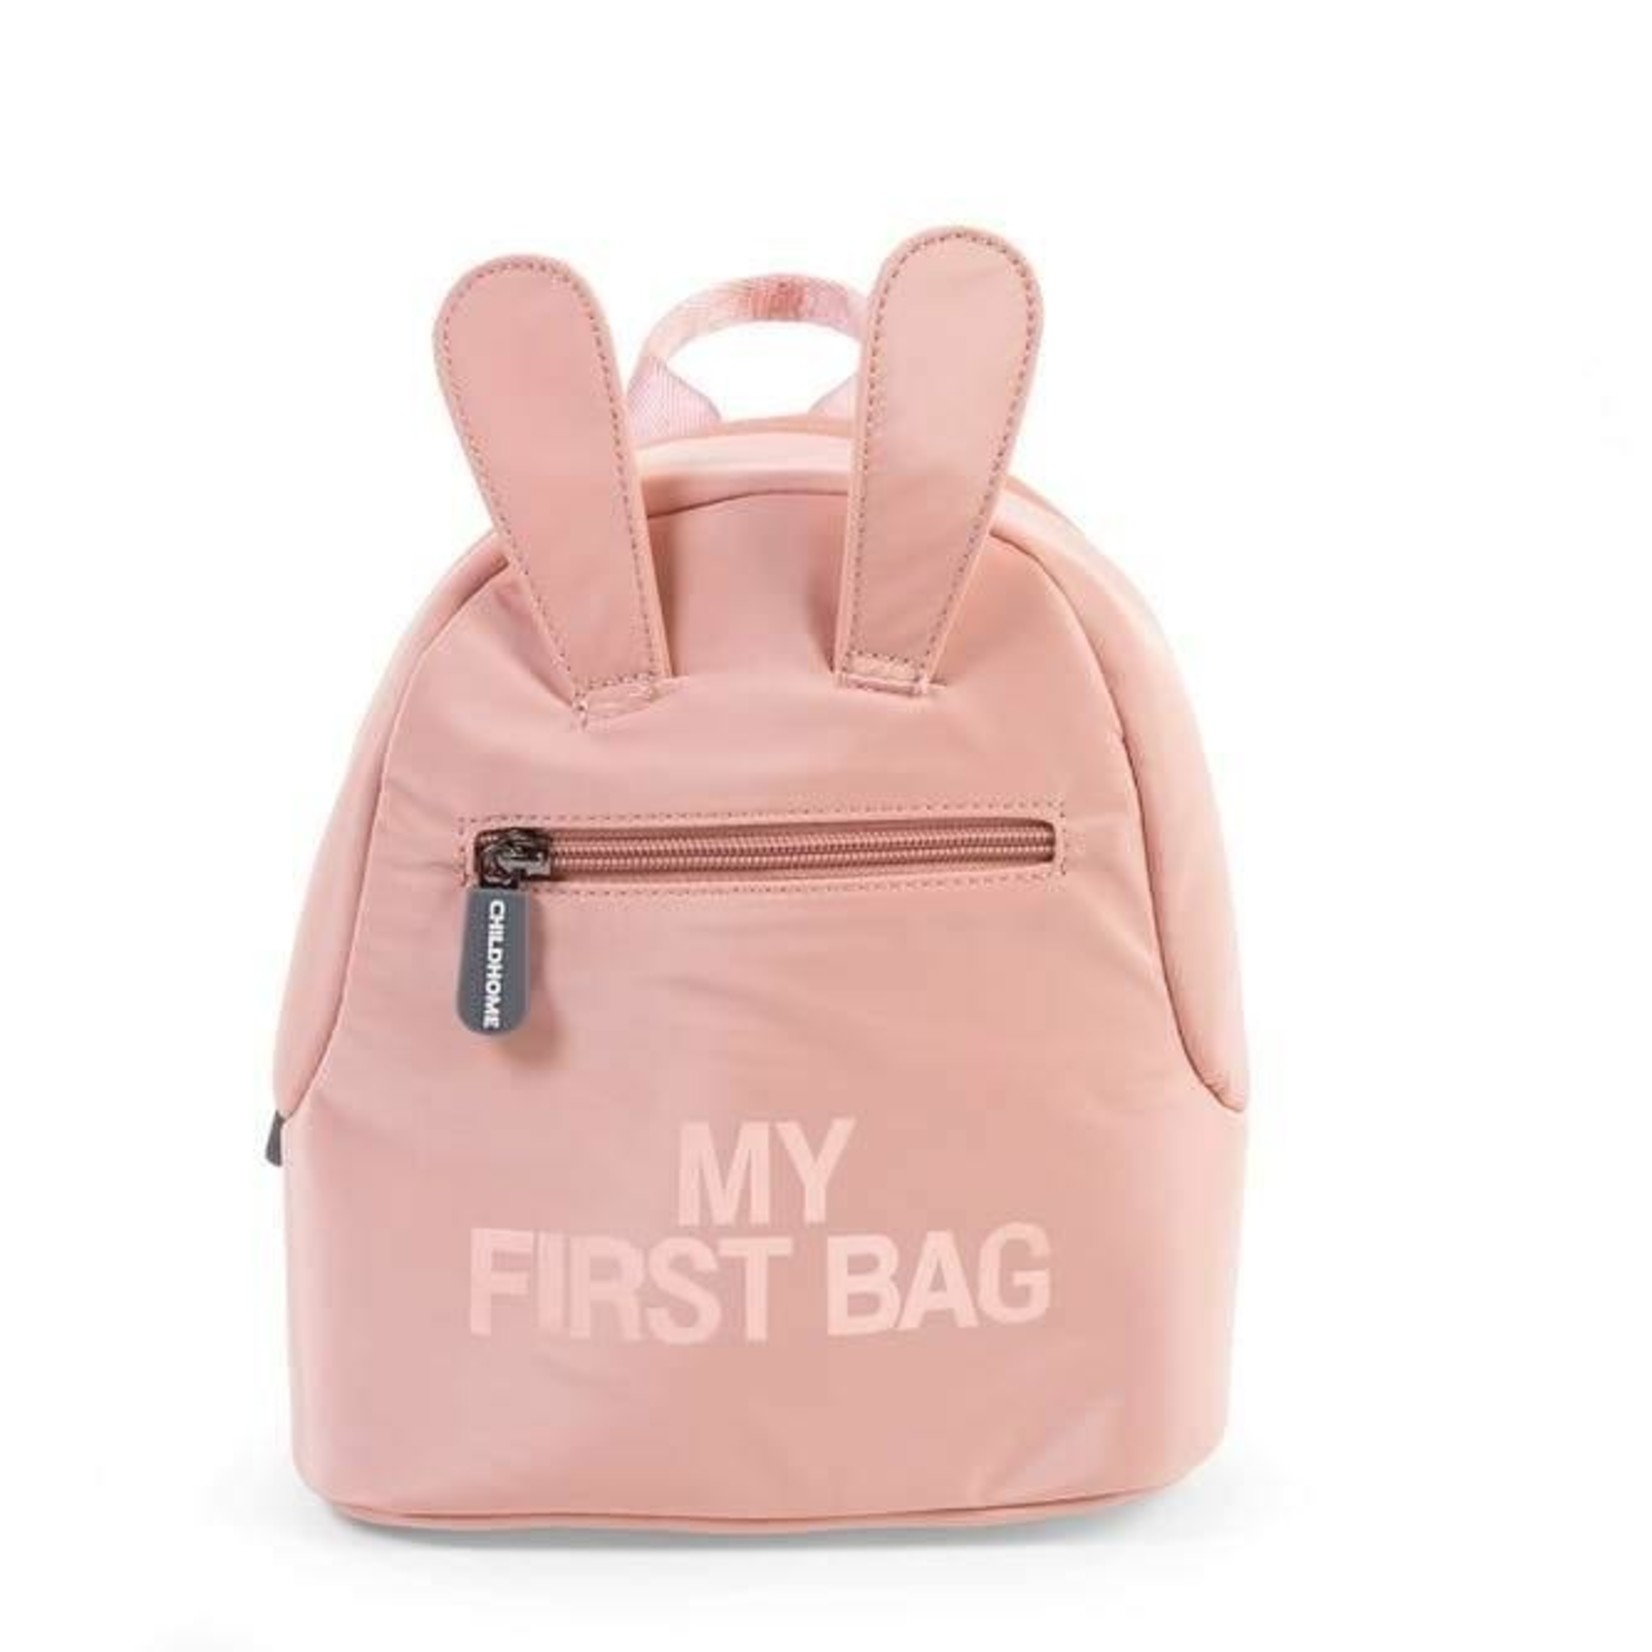 childhome My first bag roze koper